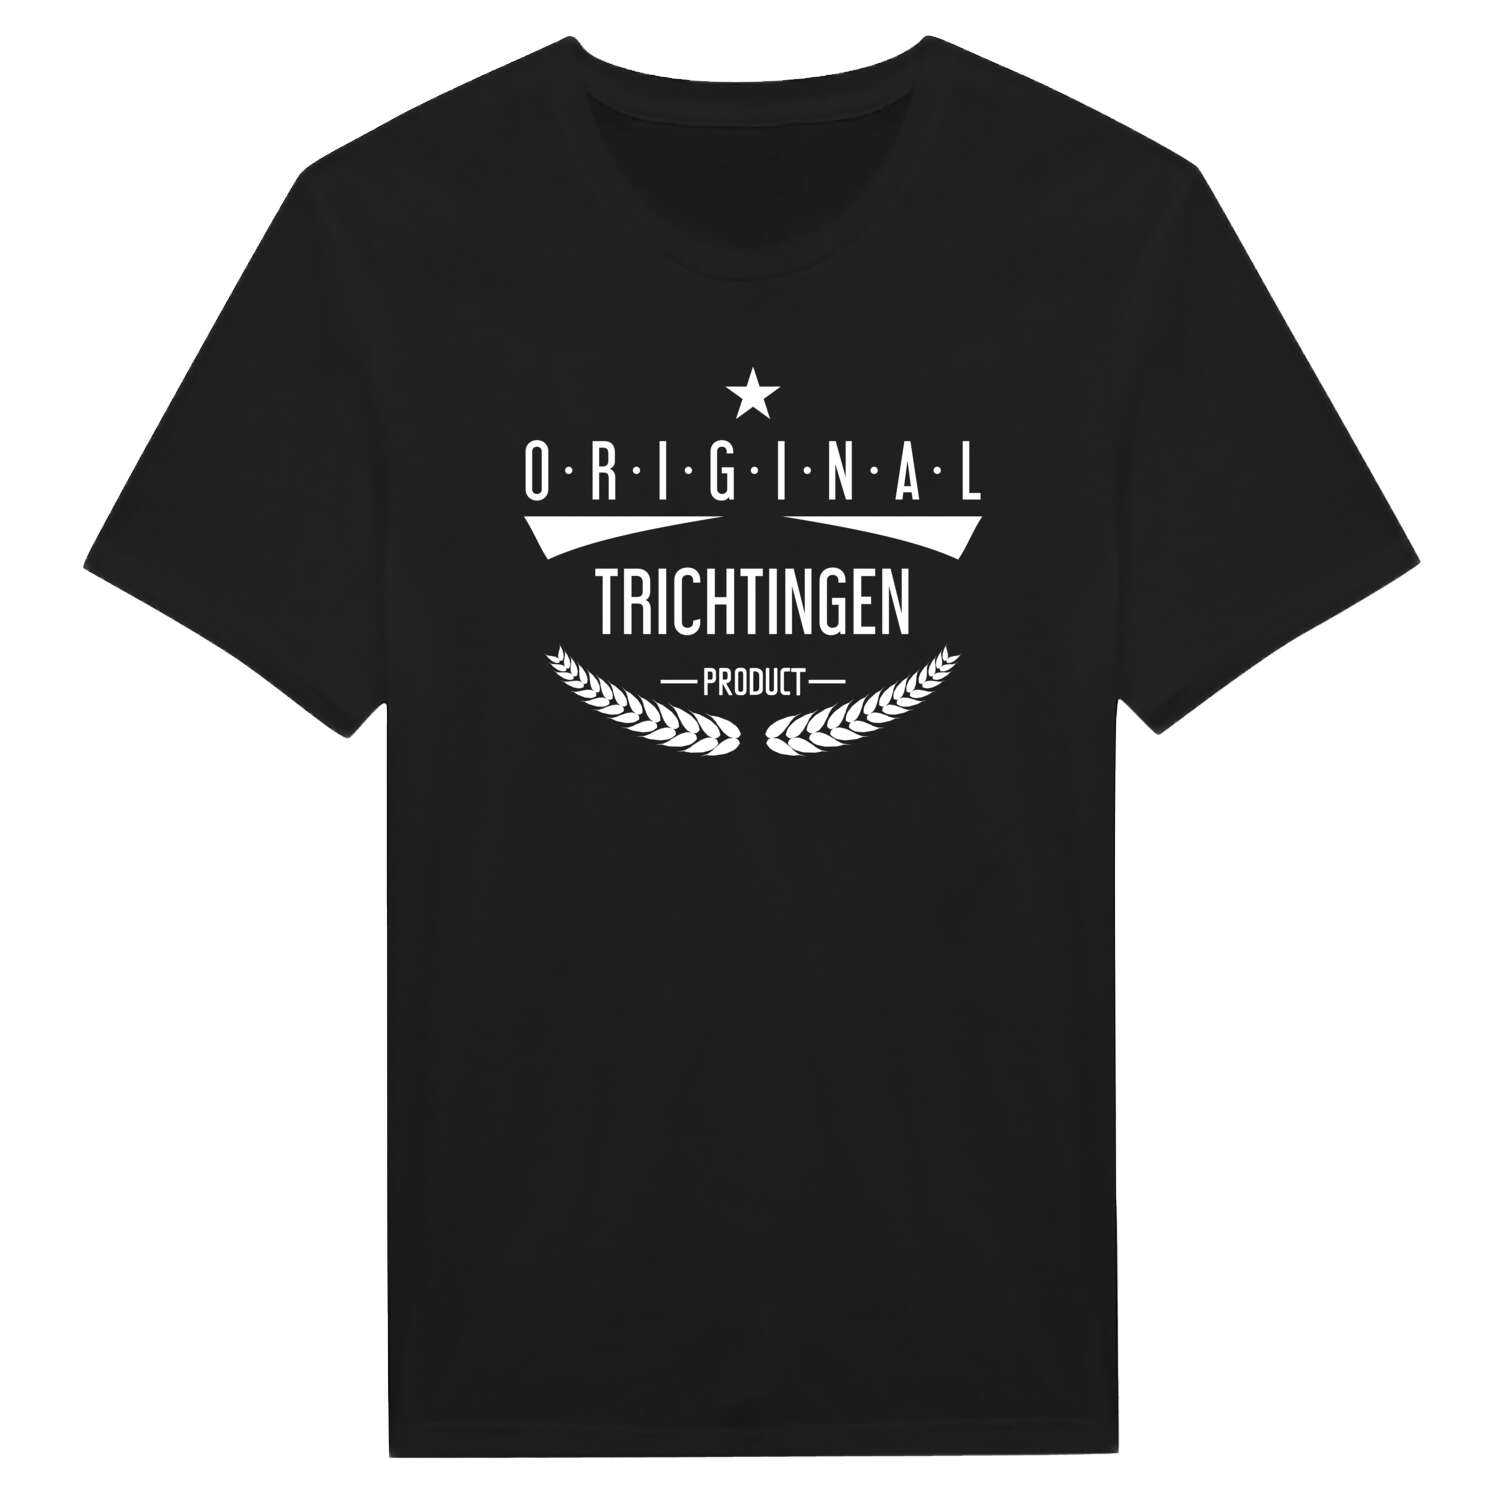 Trichtingen T-Shirt »Original Product«